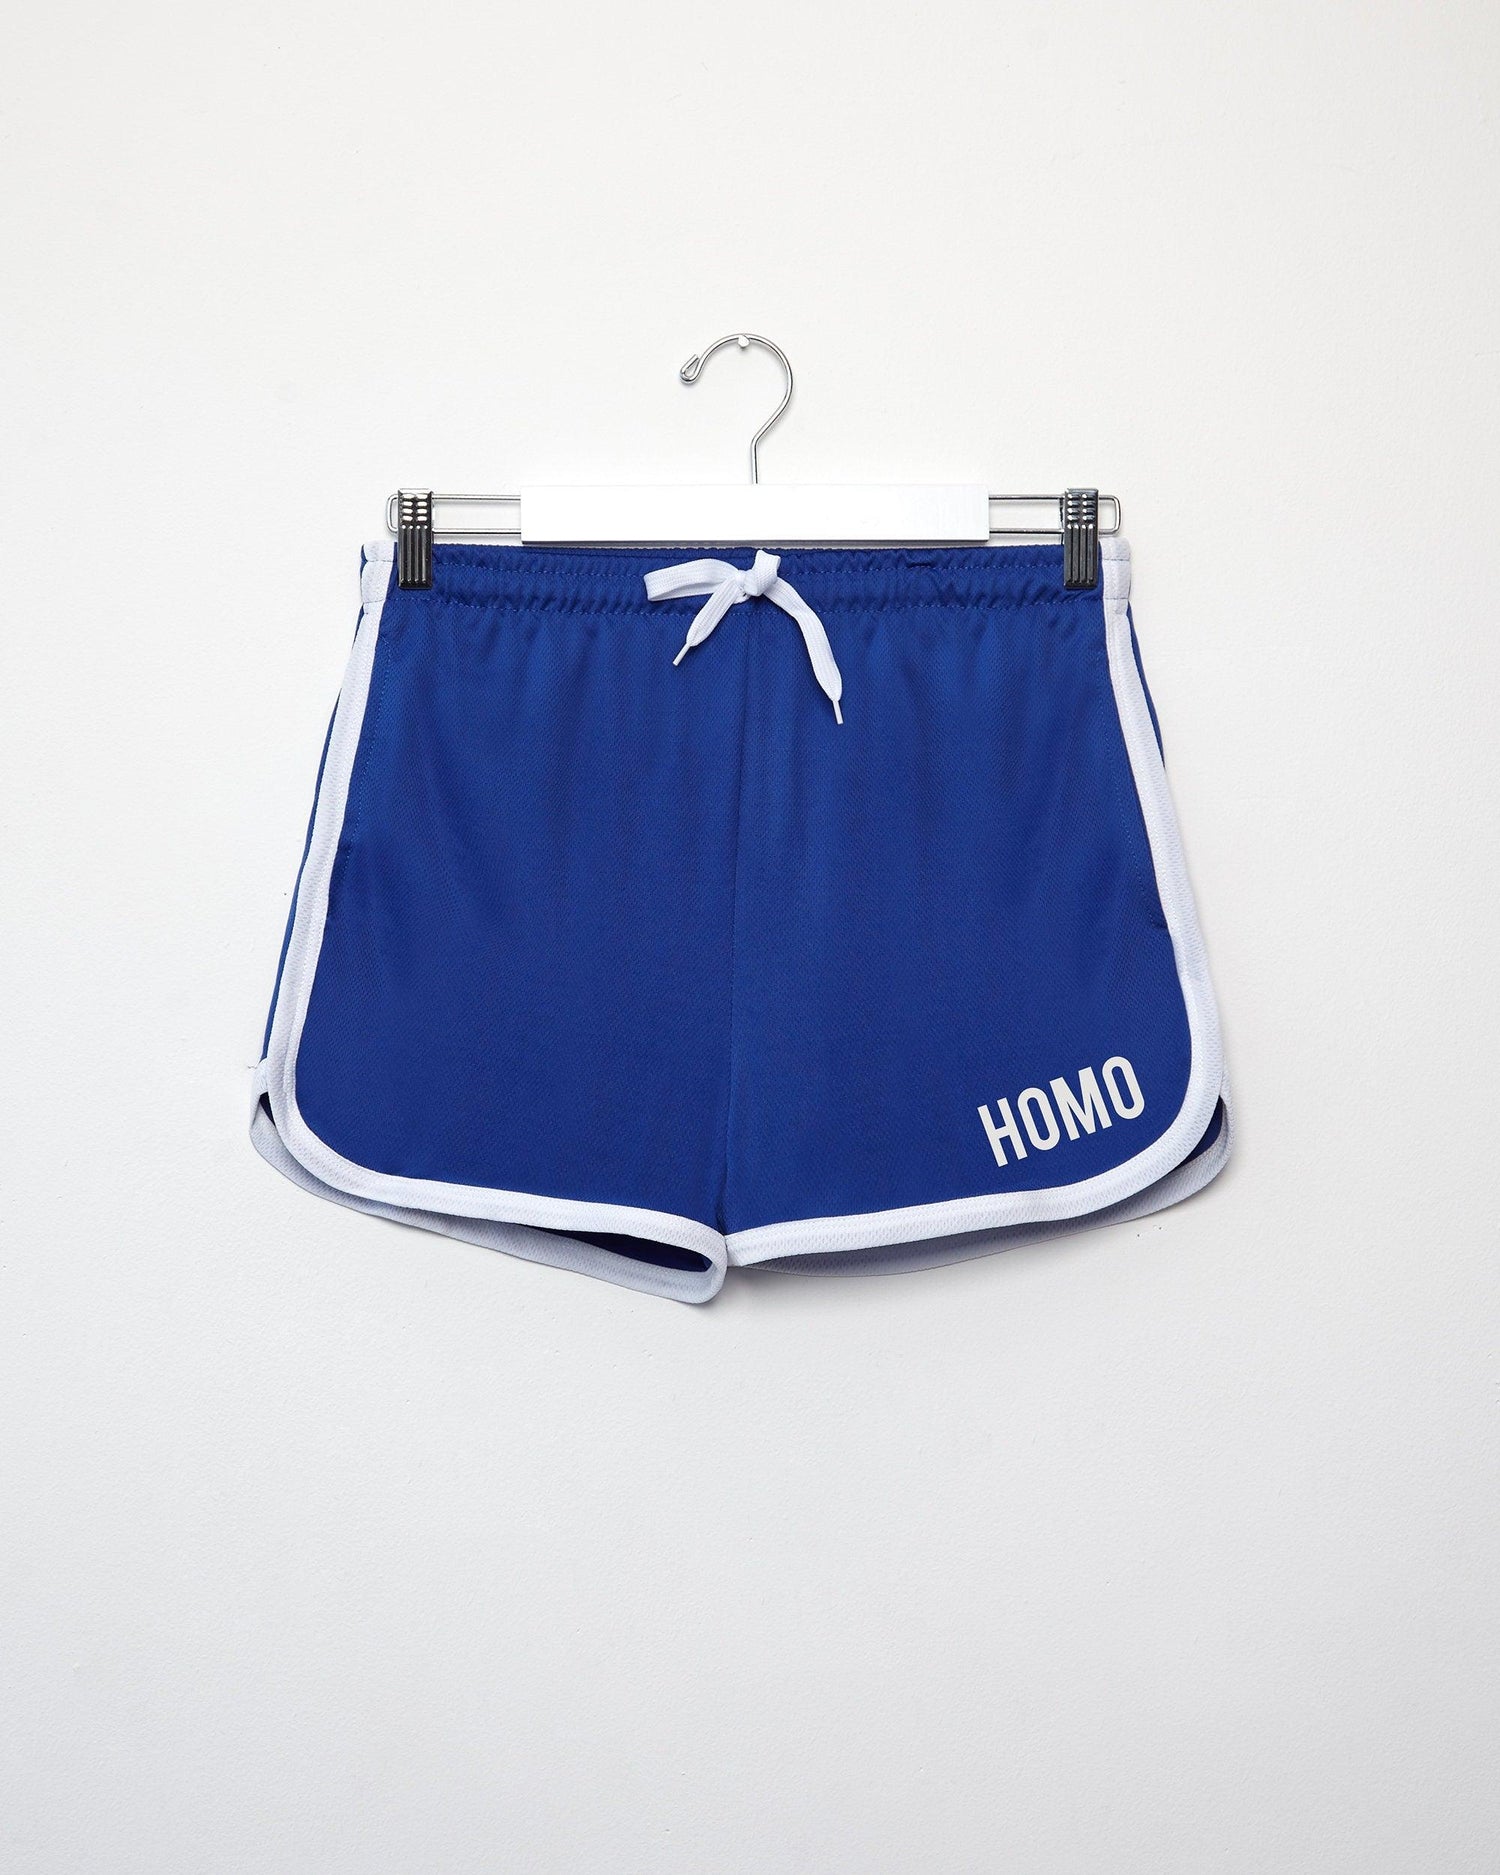 HOMO Short Shorts - Blue/White - HOMOLONDON